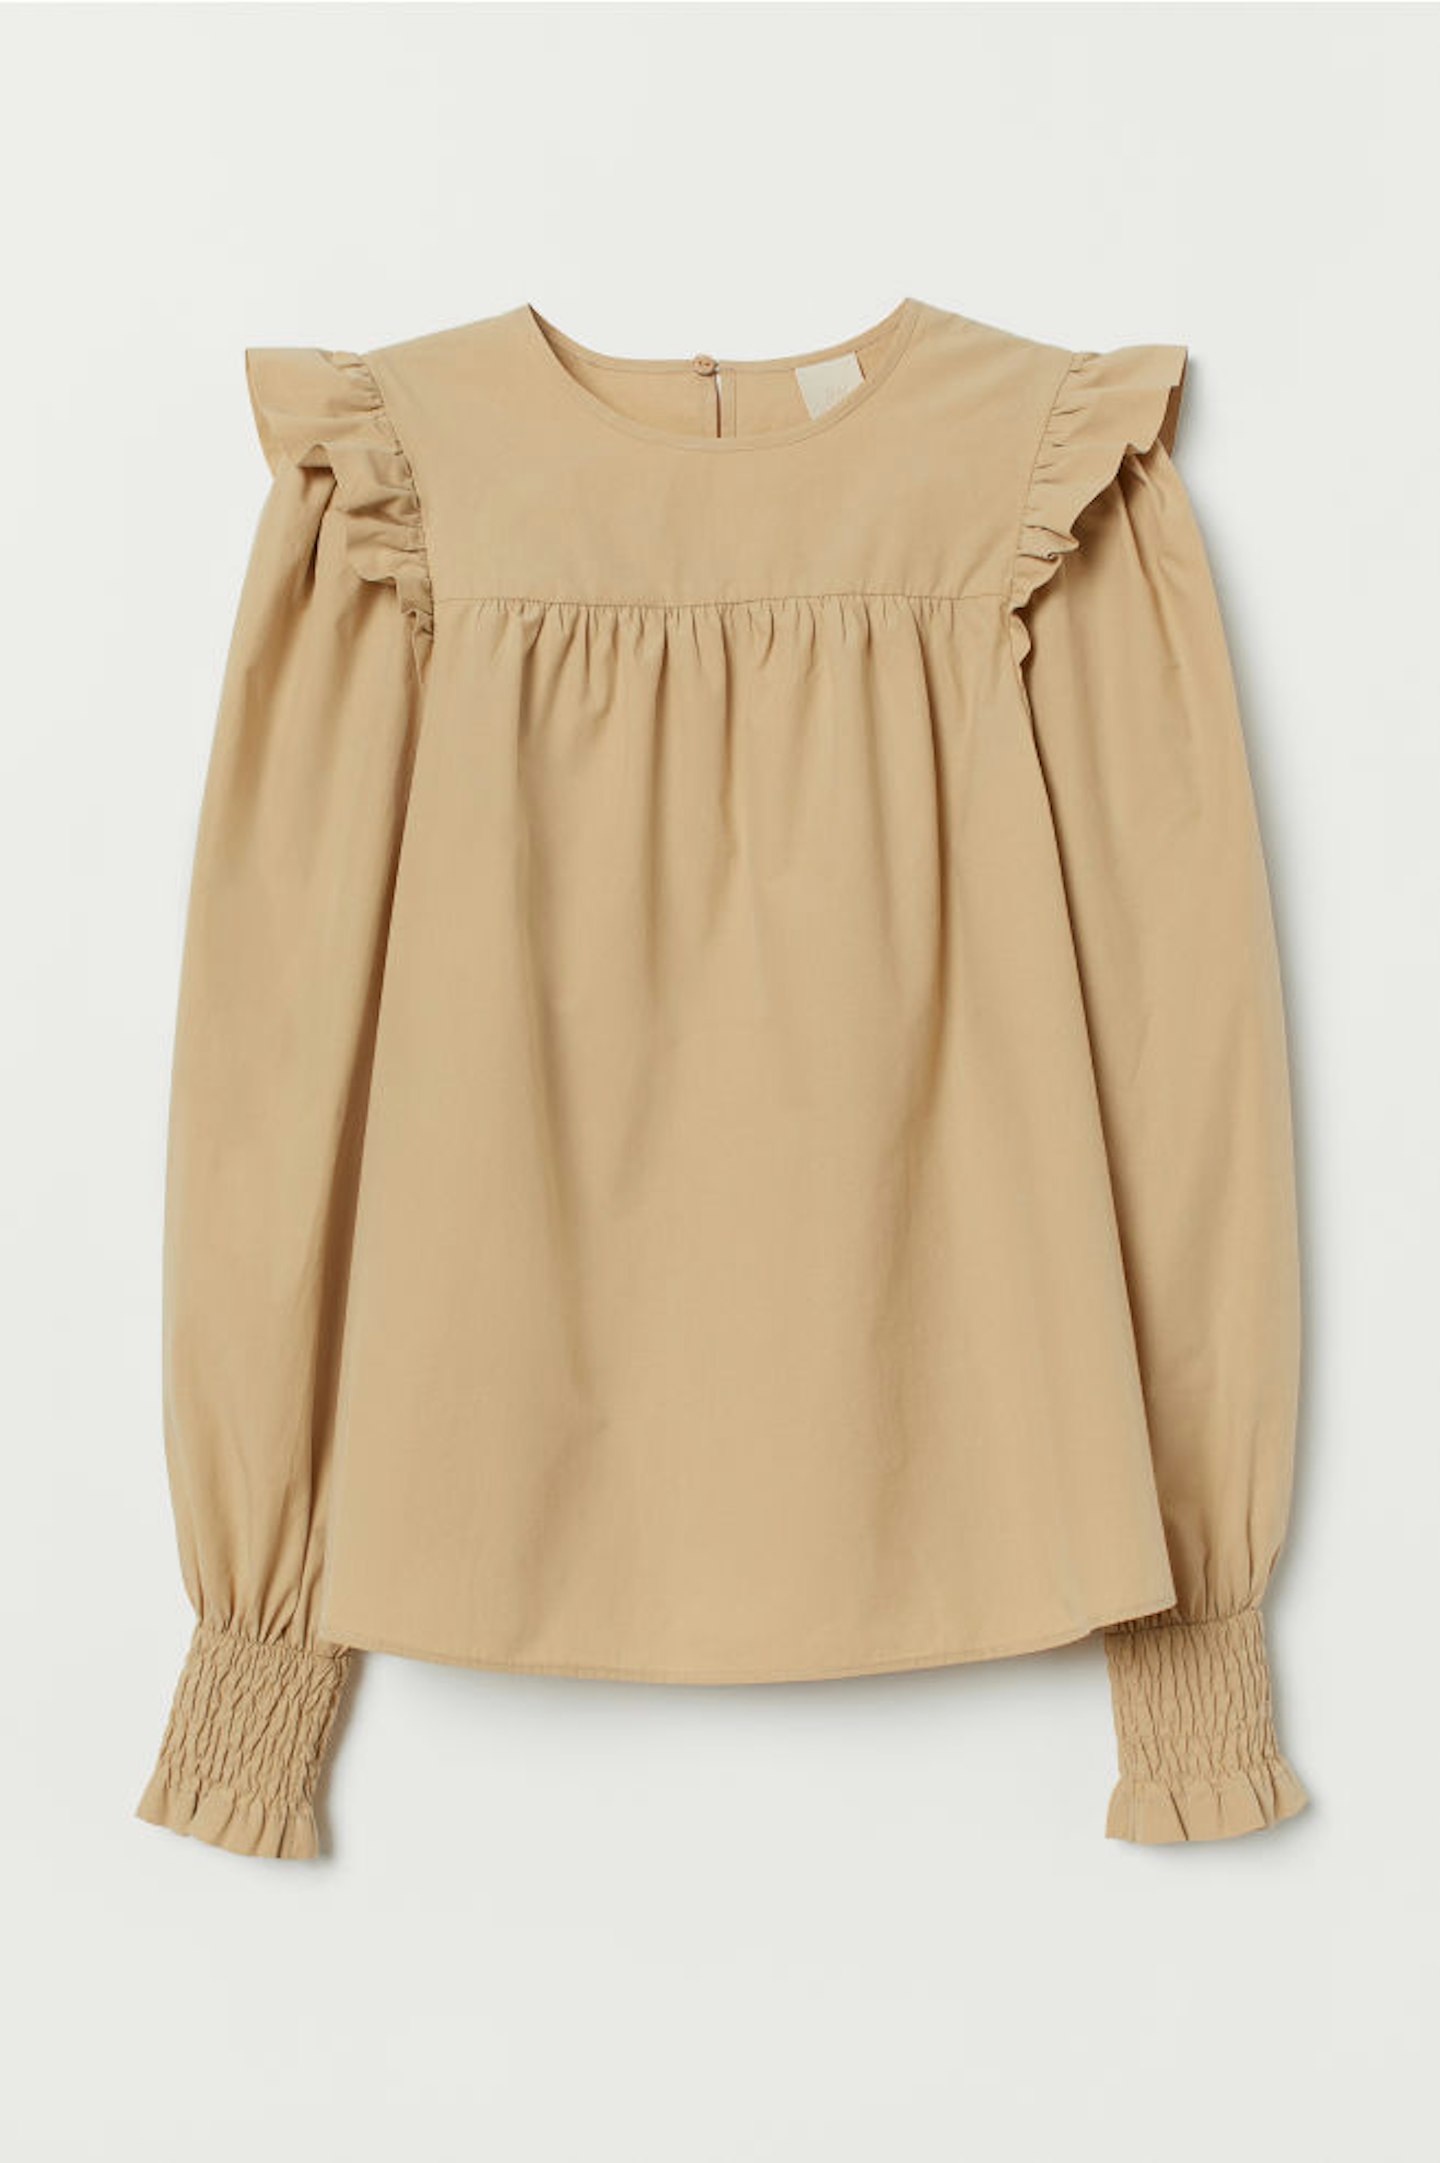 H&M, Frilled Cotton Blouse, £34.99